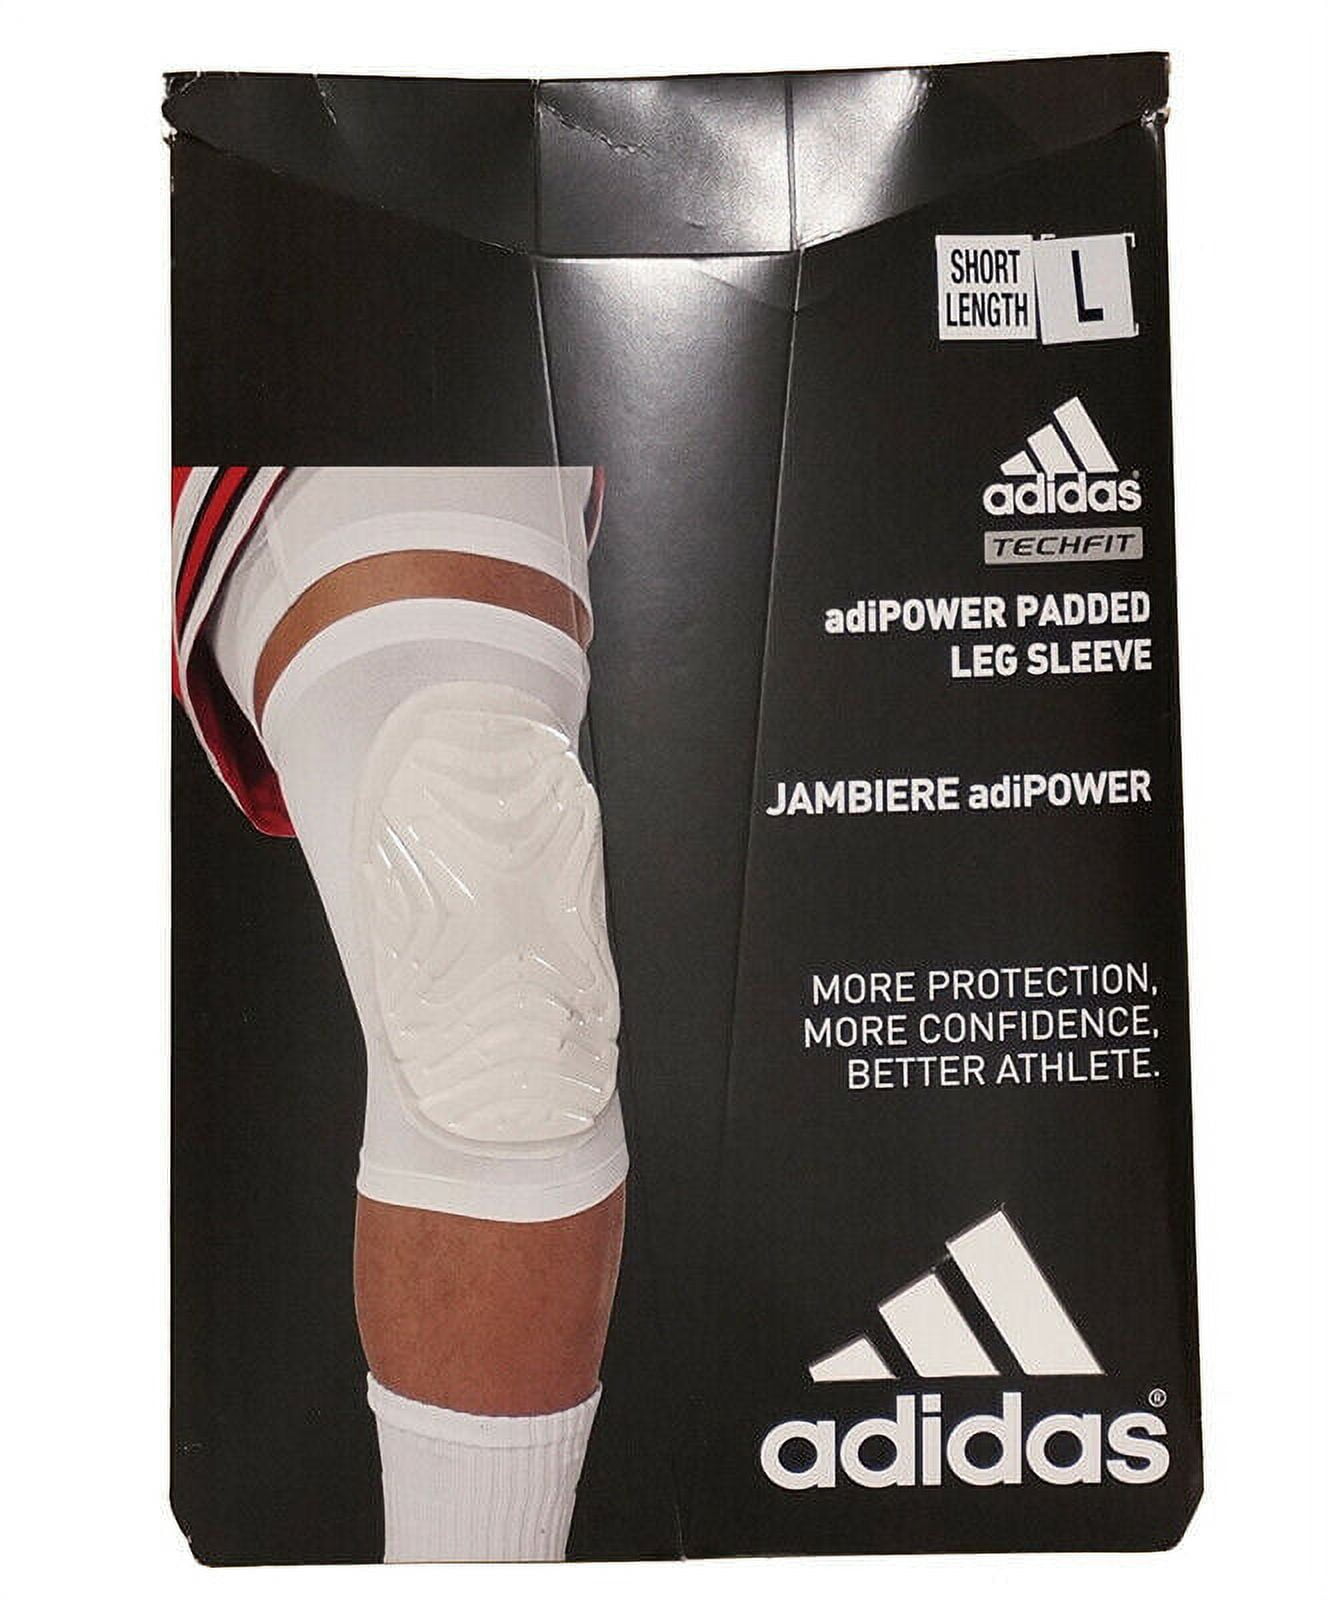 Adidas Techfit Men's Jambiere adiPOWER Padded Leg Sleeve Knee